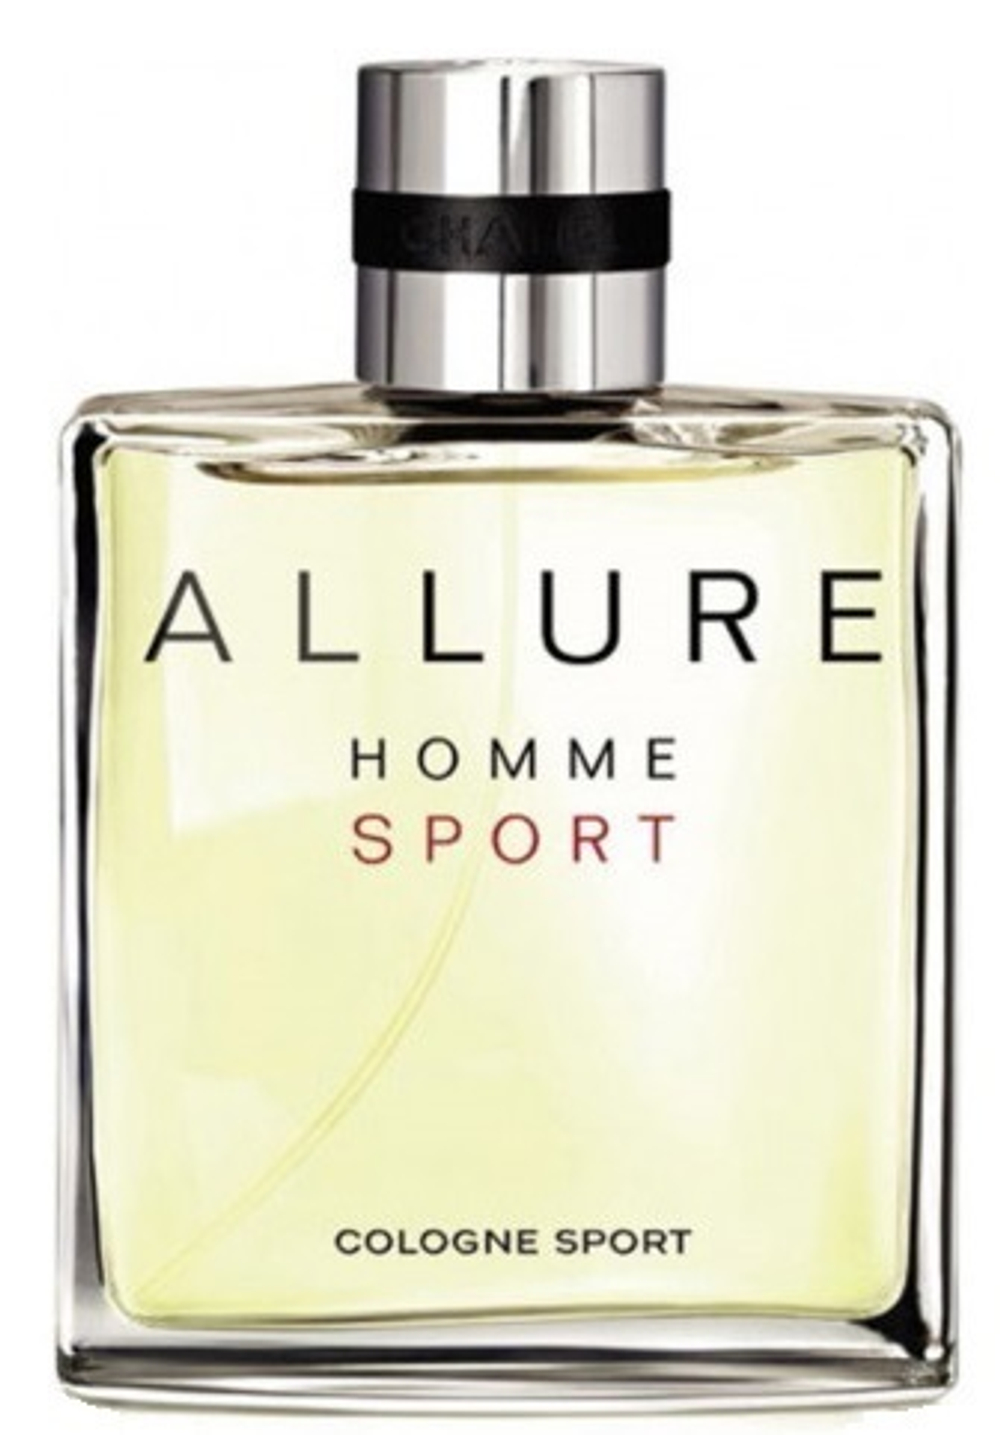 Buy Chanel Allure Homme Sport For Men Online India